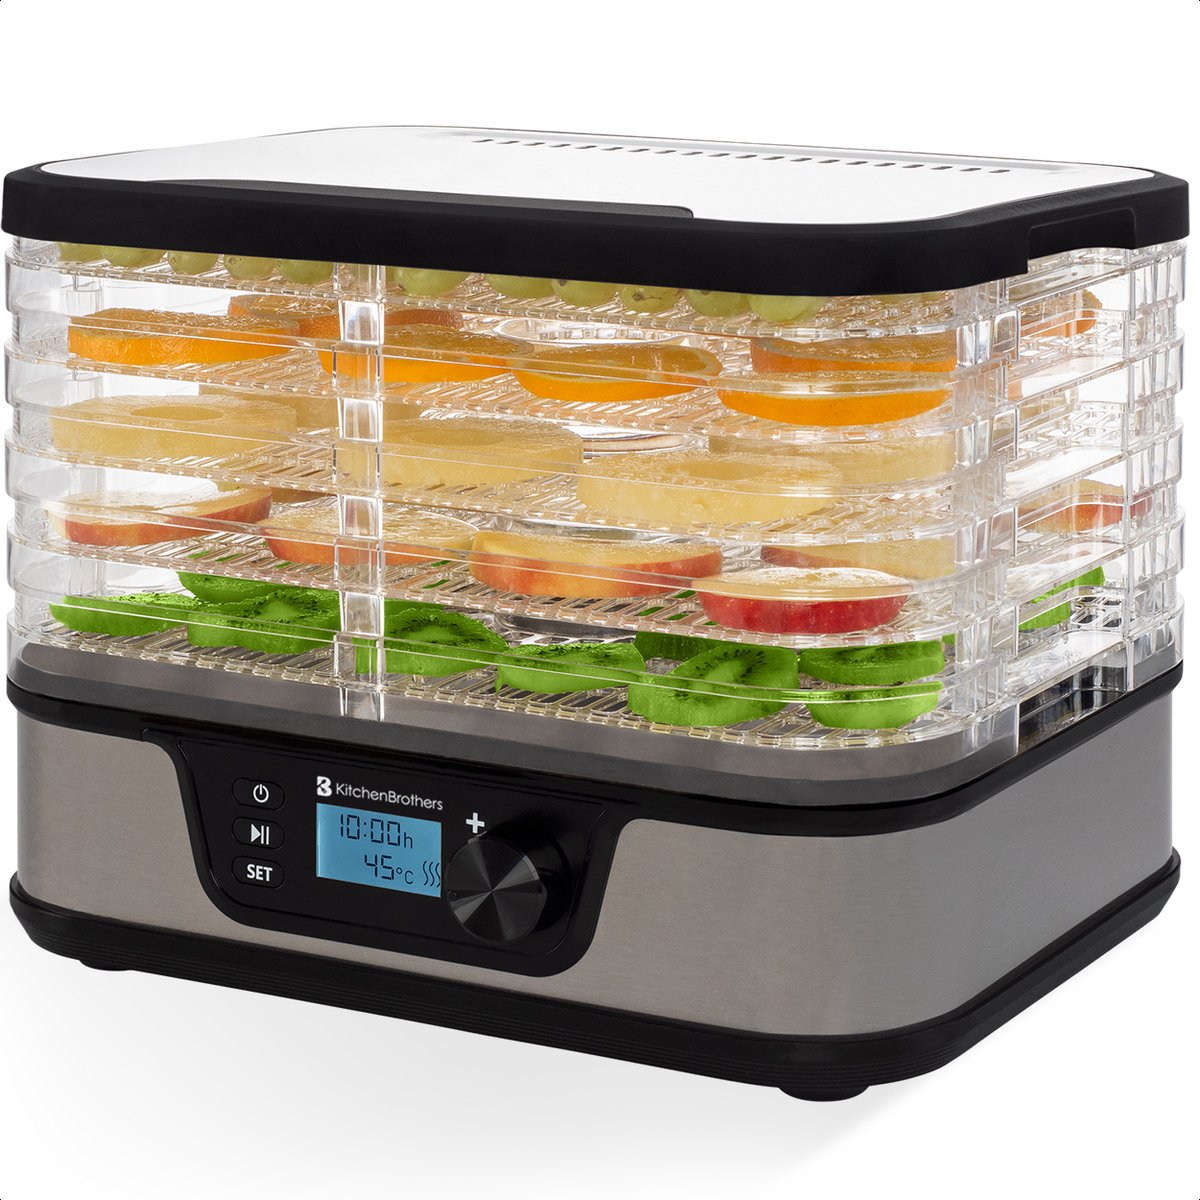 KitchenBrothers Voedseldroger - Elektrisch 380W - 5 Laags - 9 Hitte-niveaus - 35°C tot 75°C - LCD Display - Timer - RVS/Zwart - KitchenBrothers